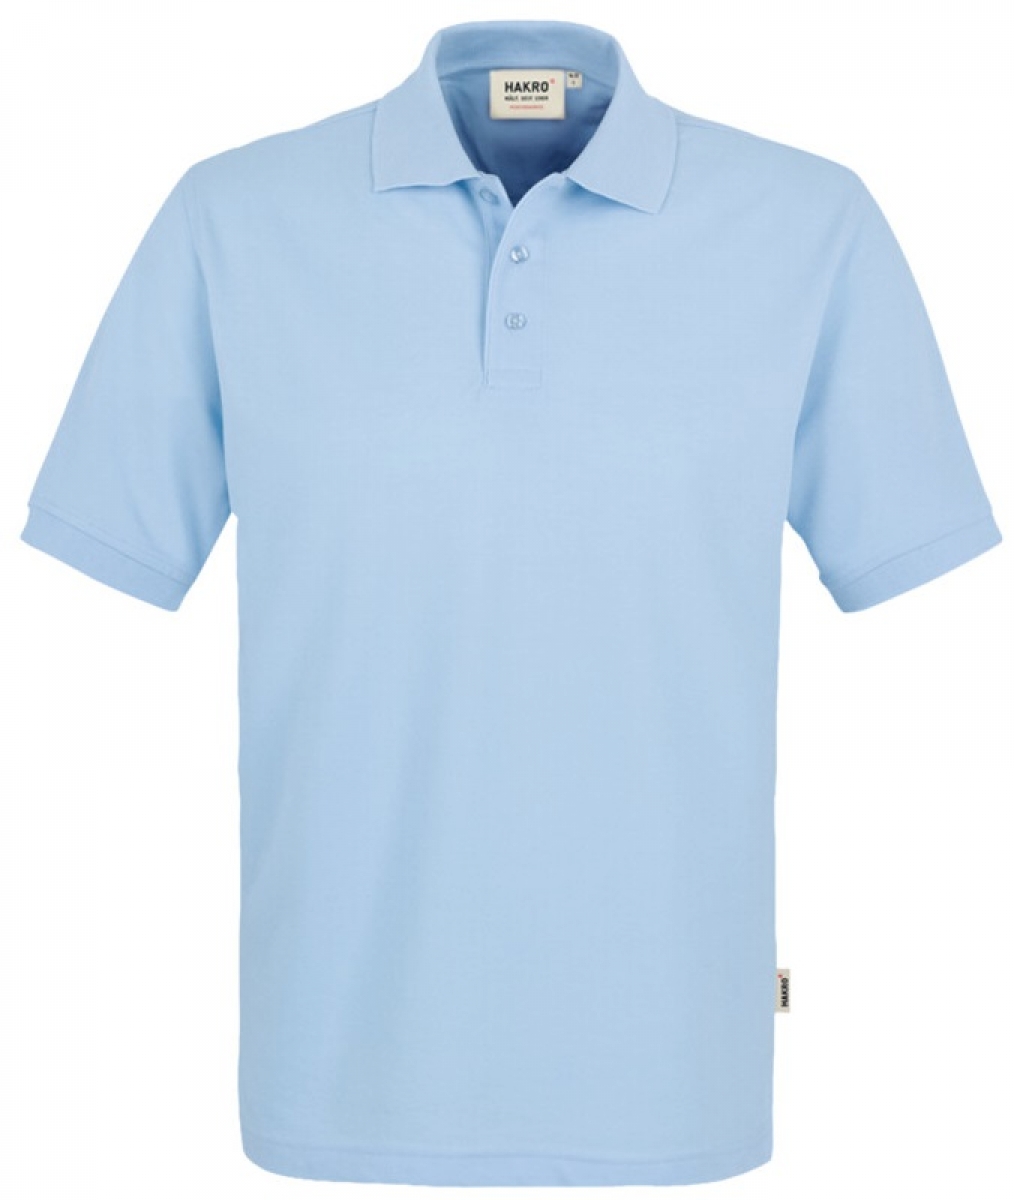 HAKRO-Worker-Shirts, Poloshirt Performance, ice-blue